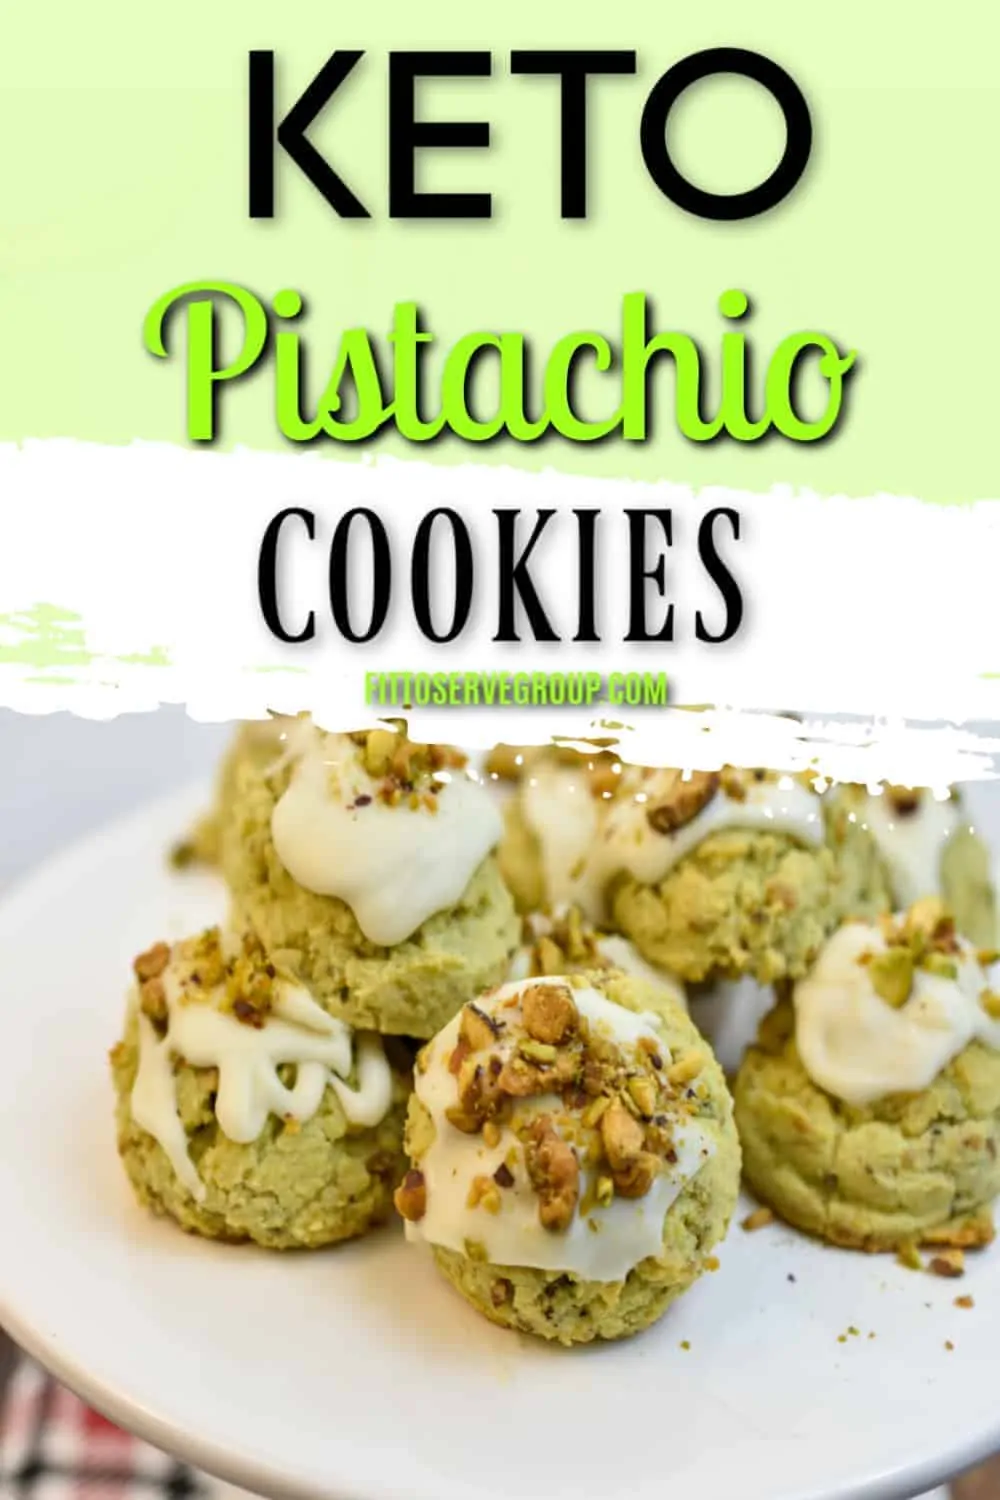 Keto pistachio St Patrick's day cookies